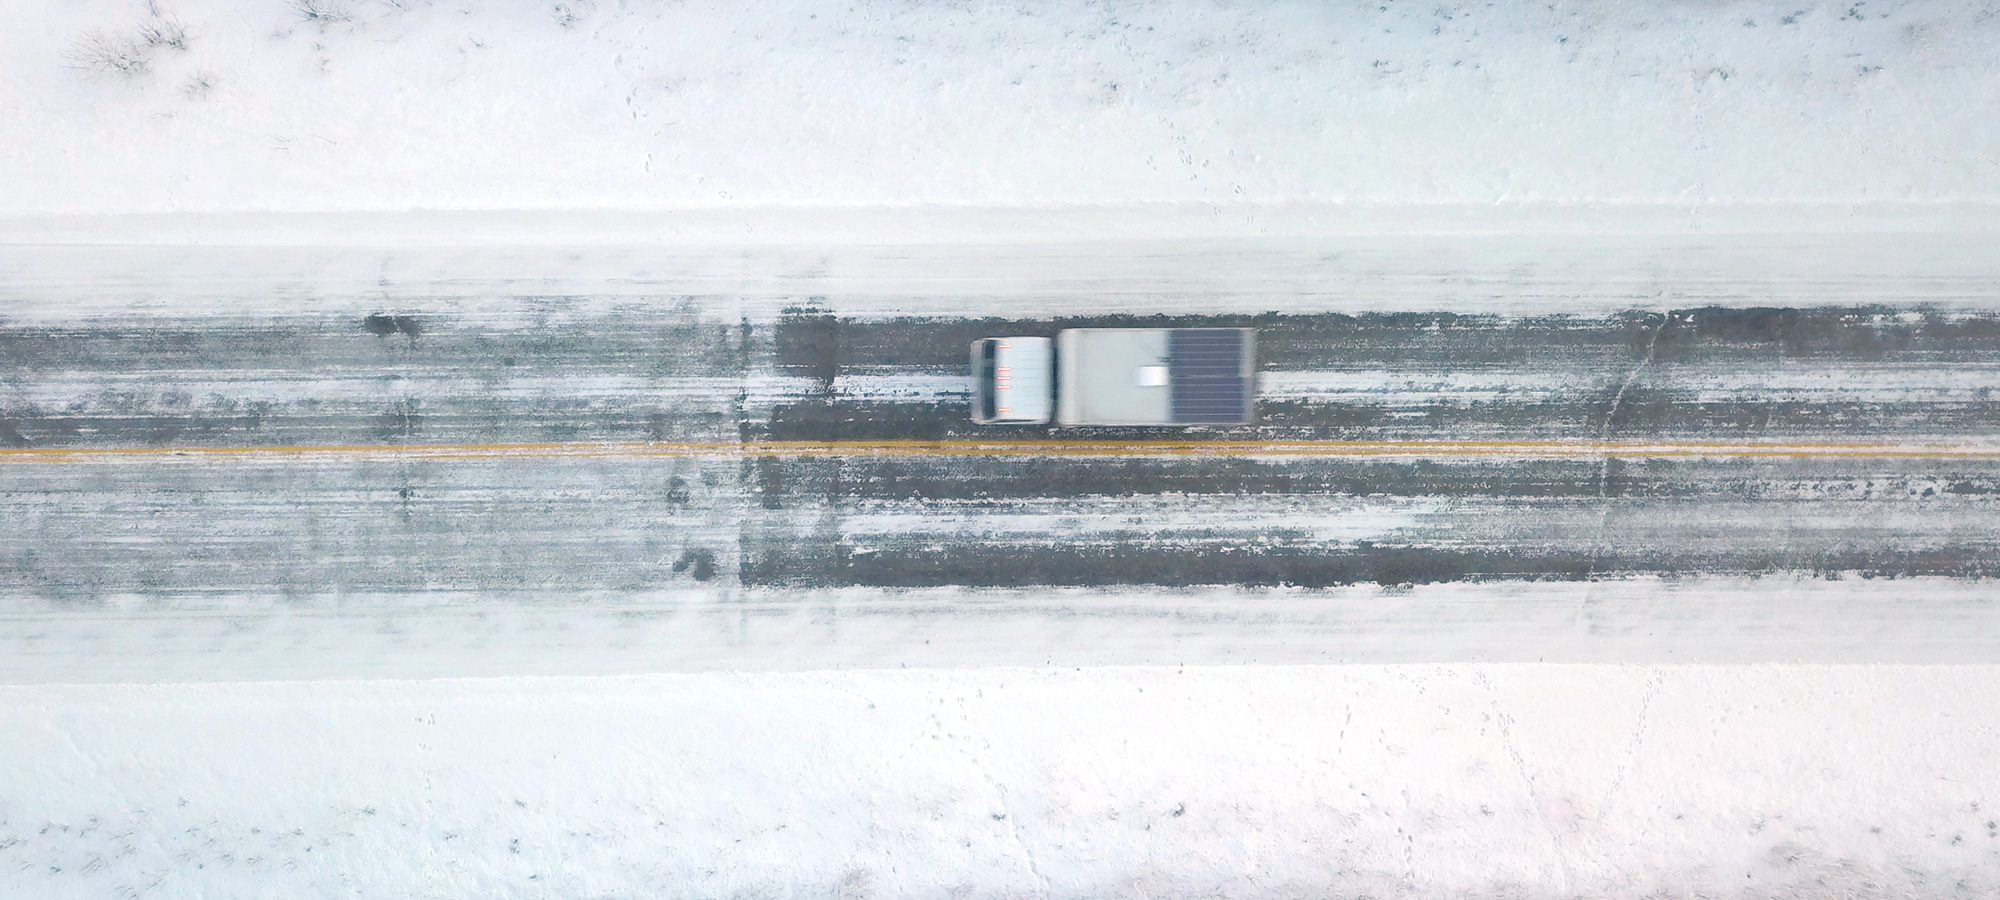 Overland vehicle through the arctic snow.